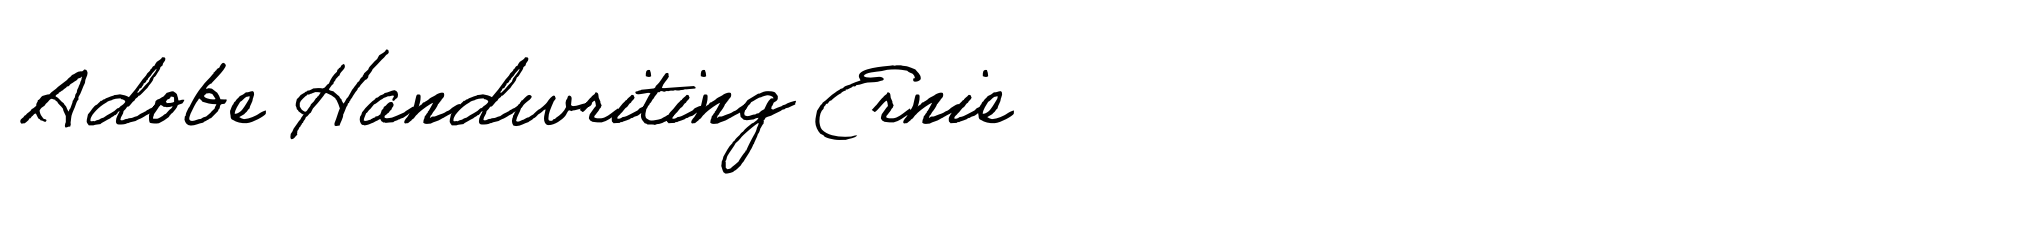 Adobe Handwriting Ernie image